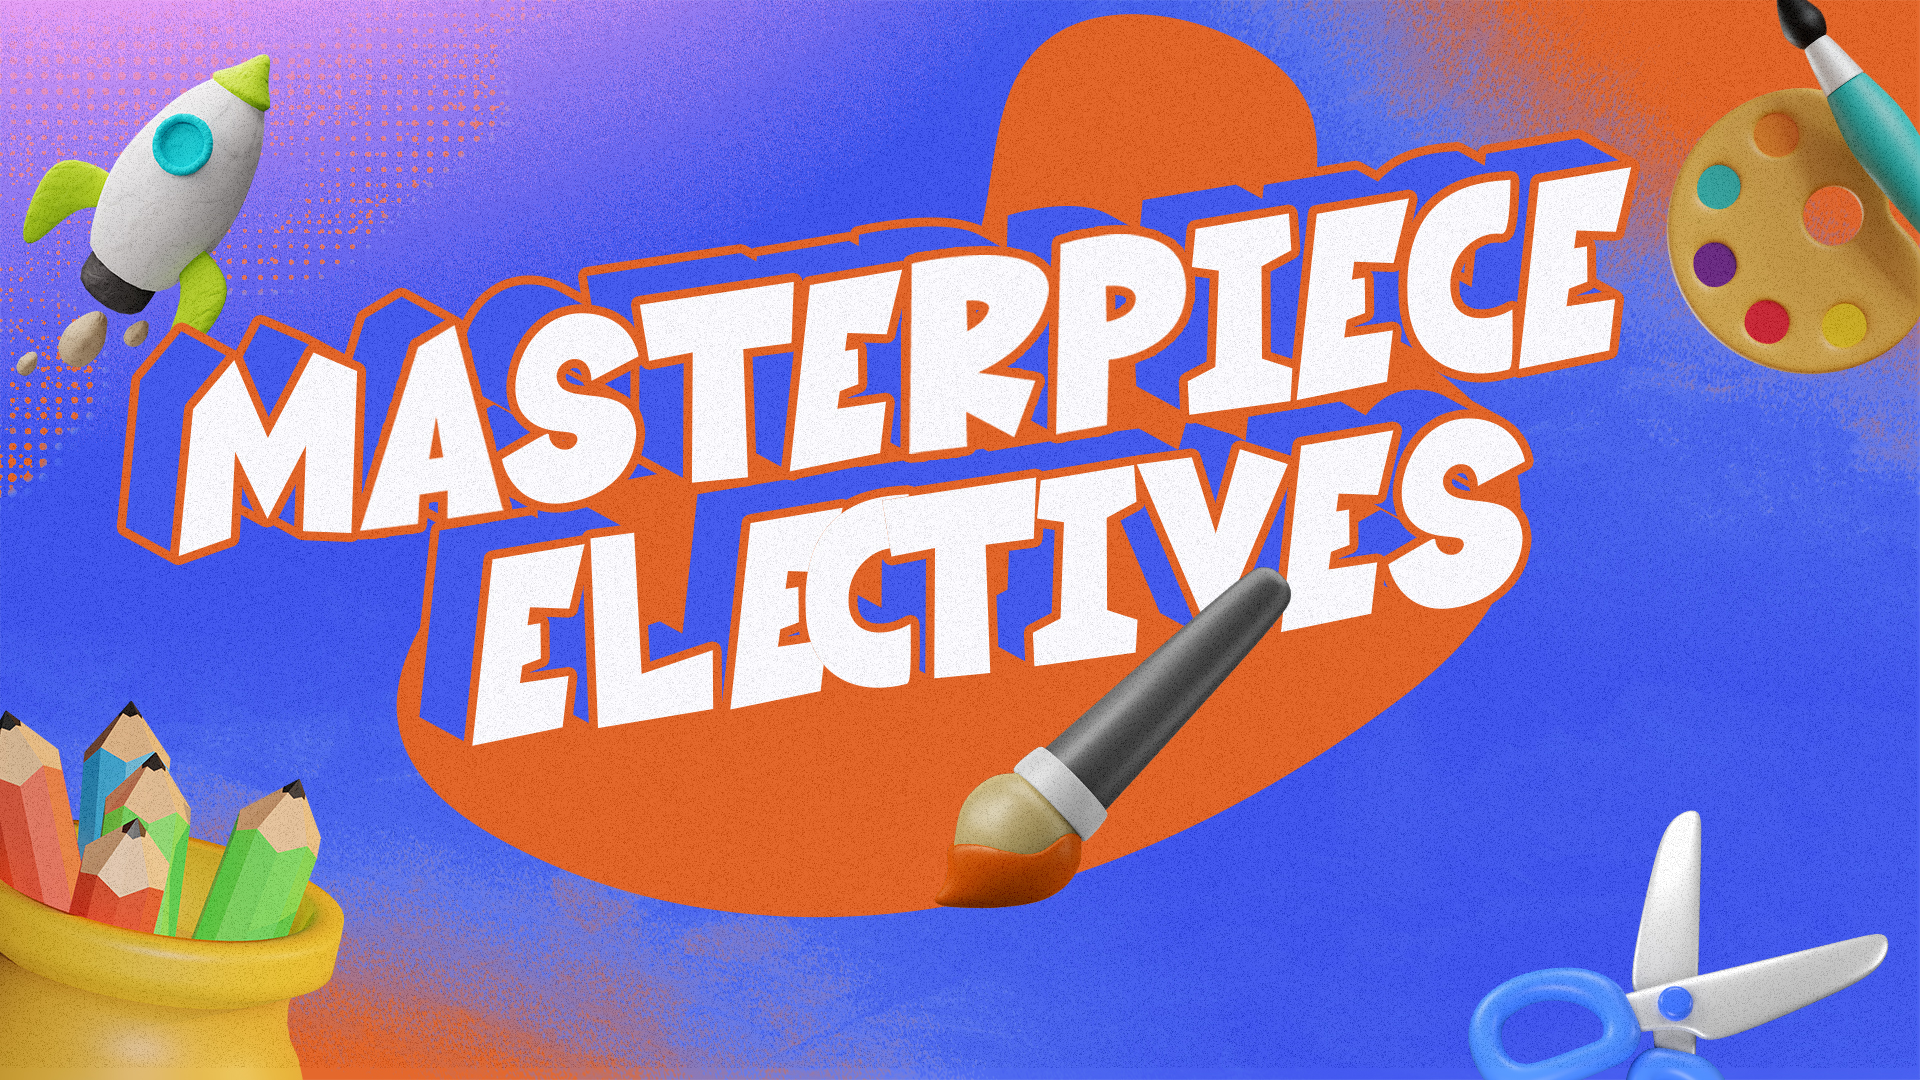 Masterpiece Electives -HD Title Slide (1920x1080)